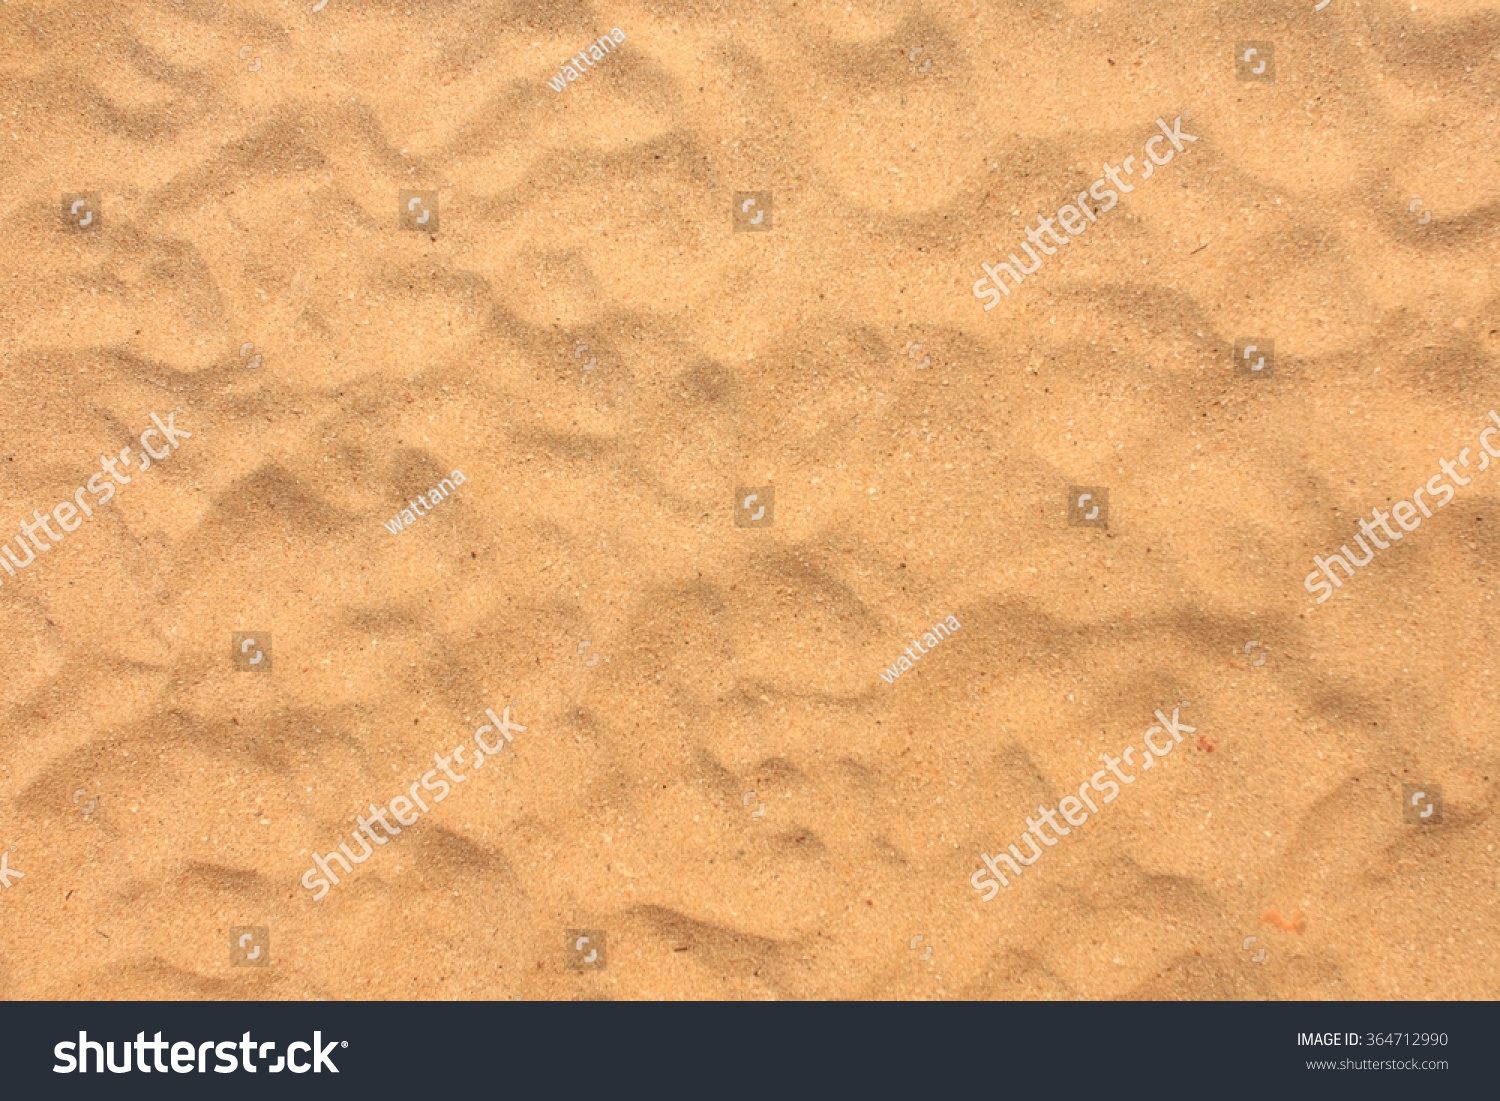 closeup of sand of a beach , close up view beach sand background #364712990